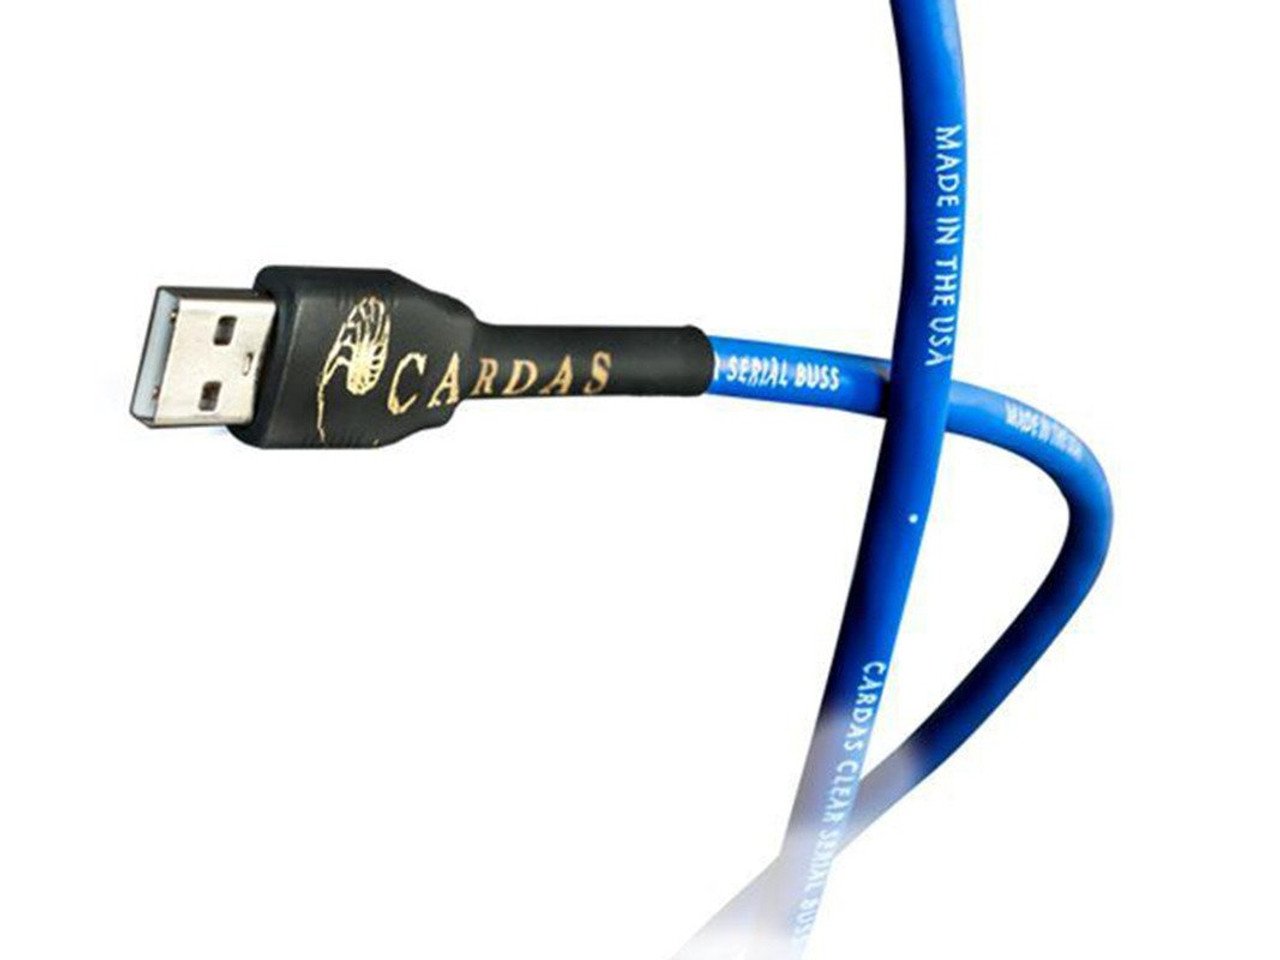 Slange Tutor Pump Cardas Clear Serial Bus USB Cable